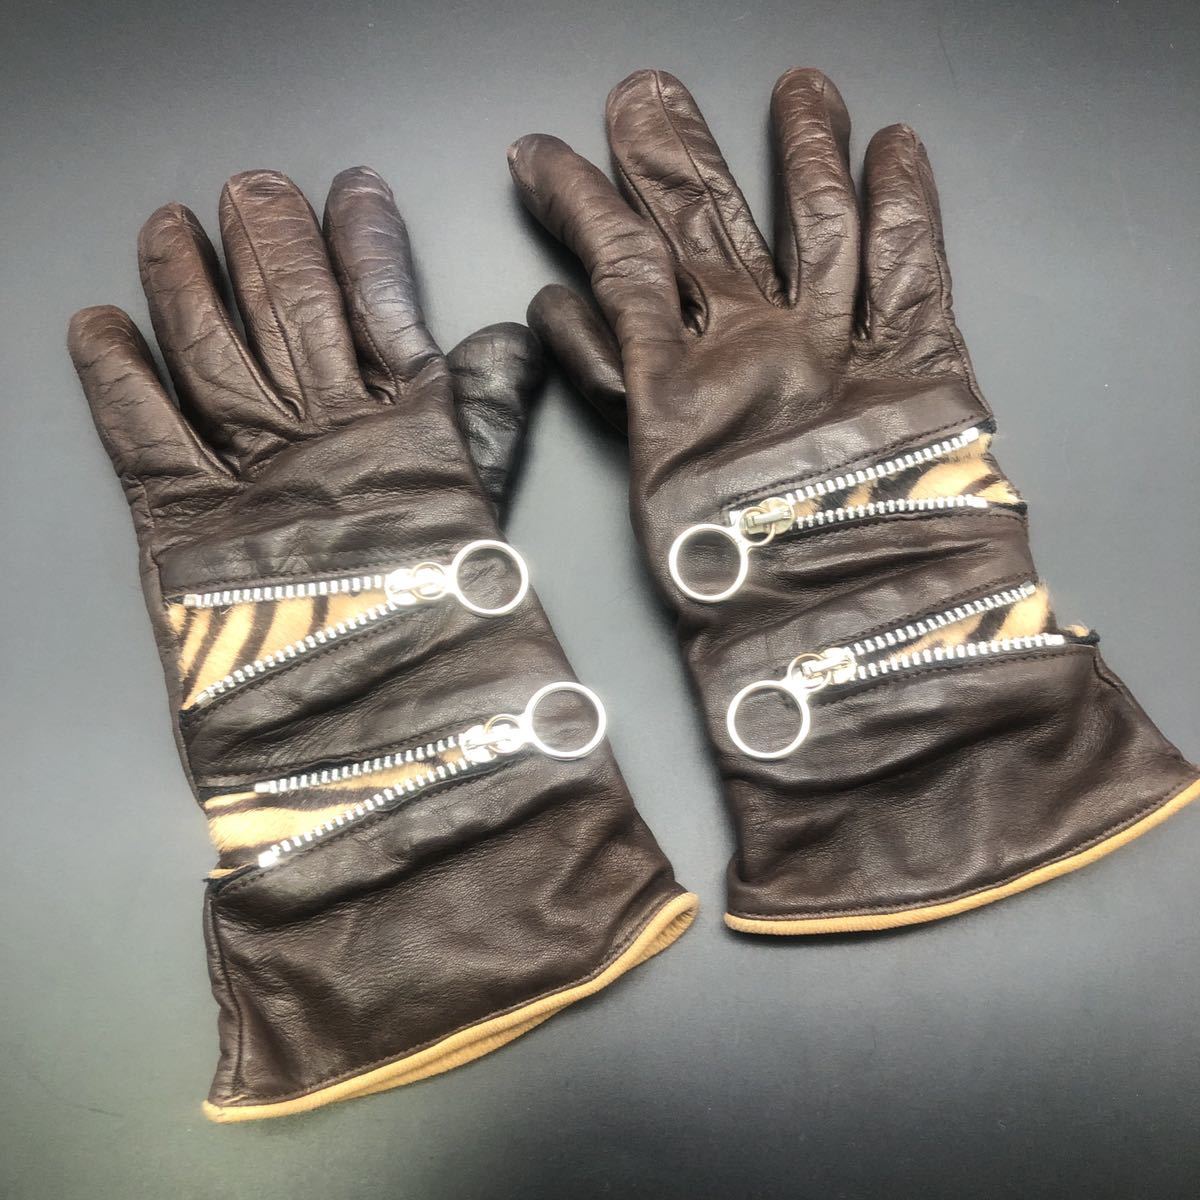  prompt decision Sermoneta gloves glove gloves 